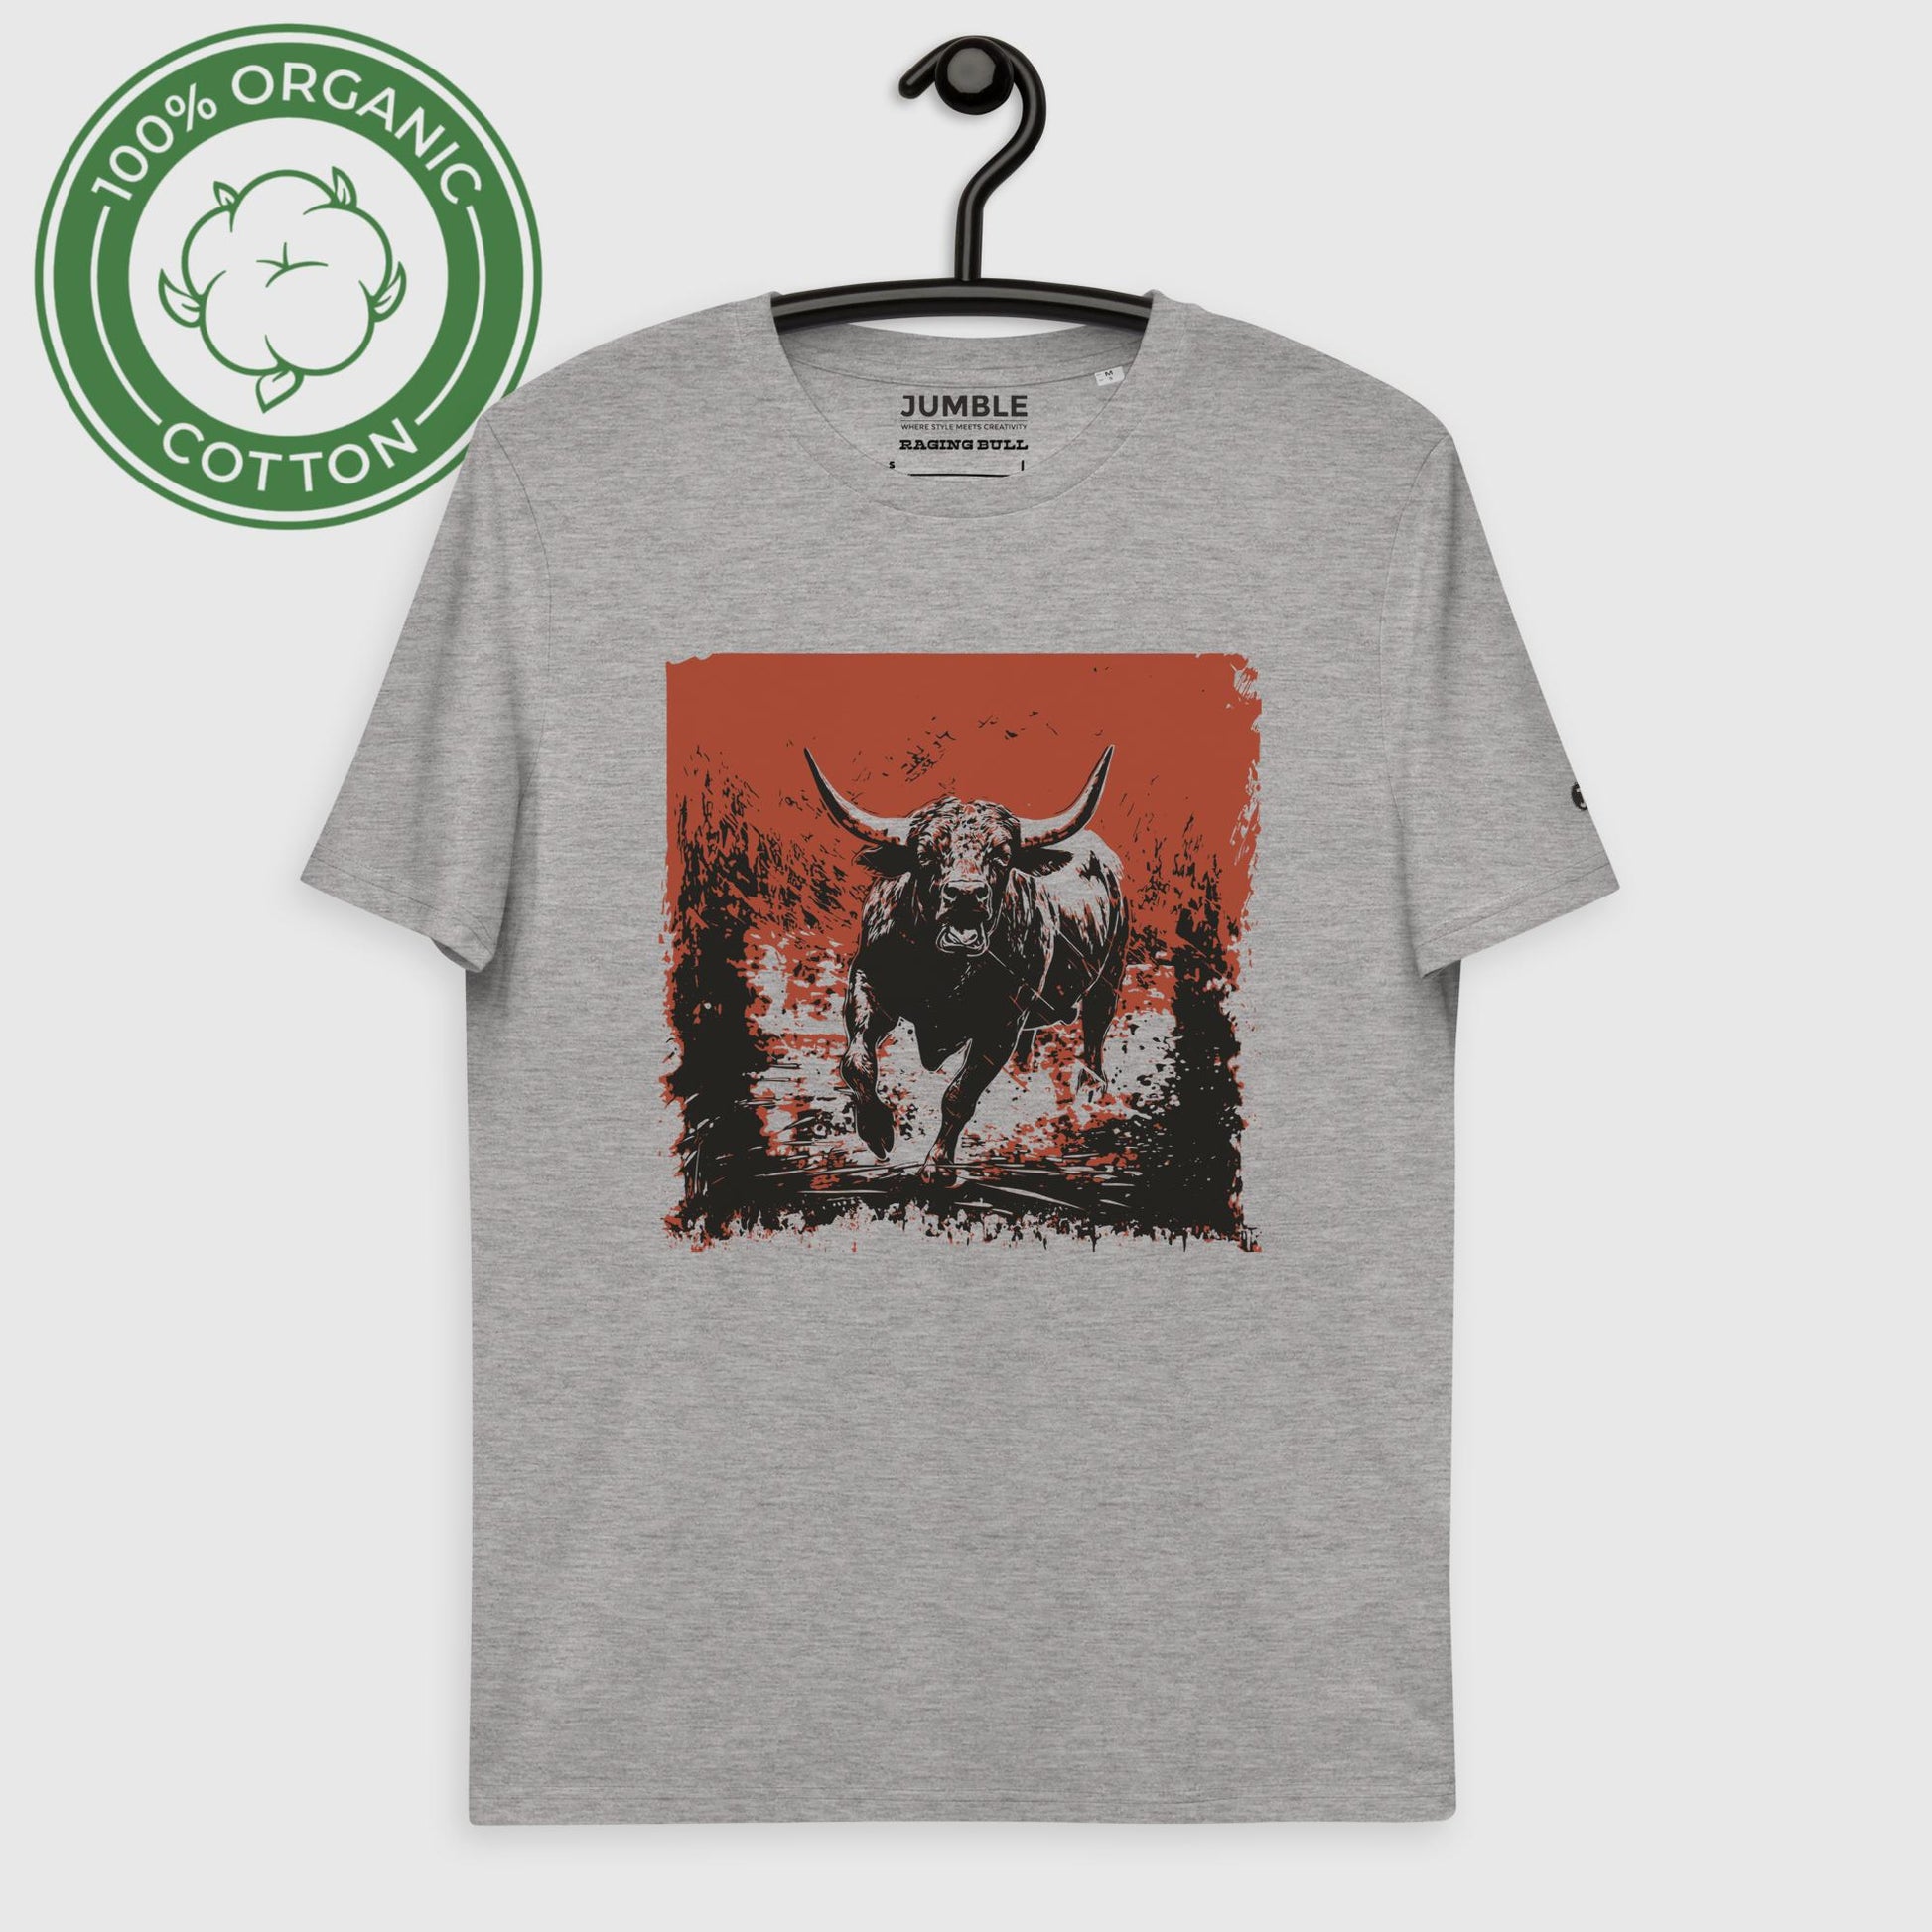 Raging Bull Unisex organic cotton t-shirt, in heather grey.Displayed on hanger